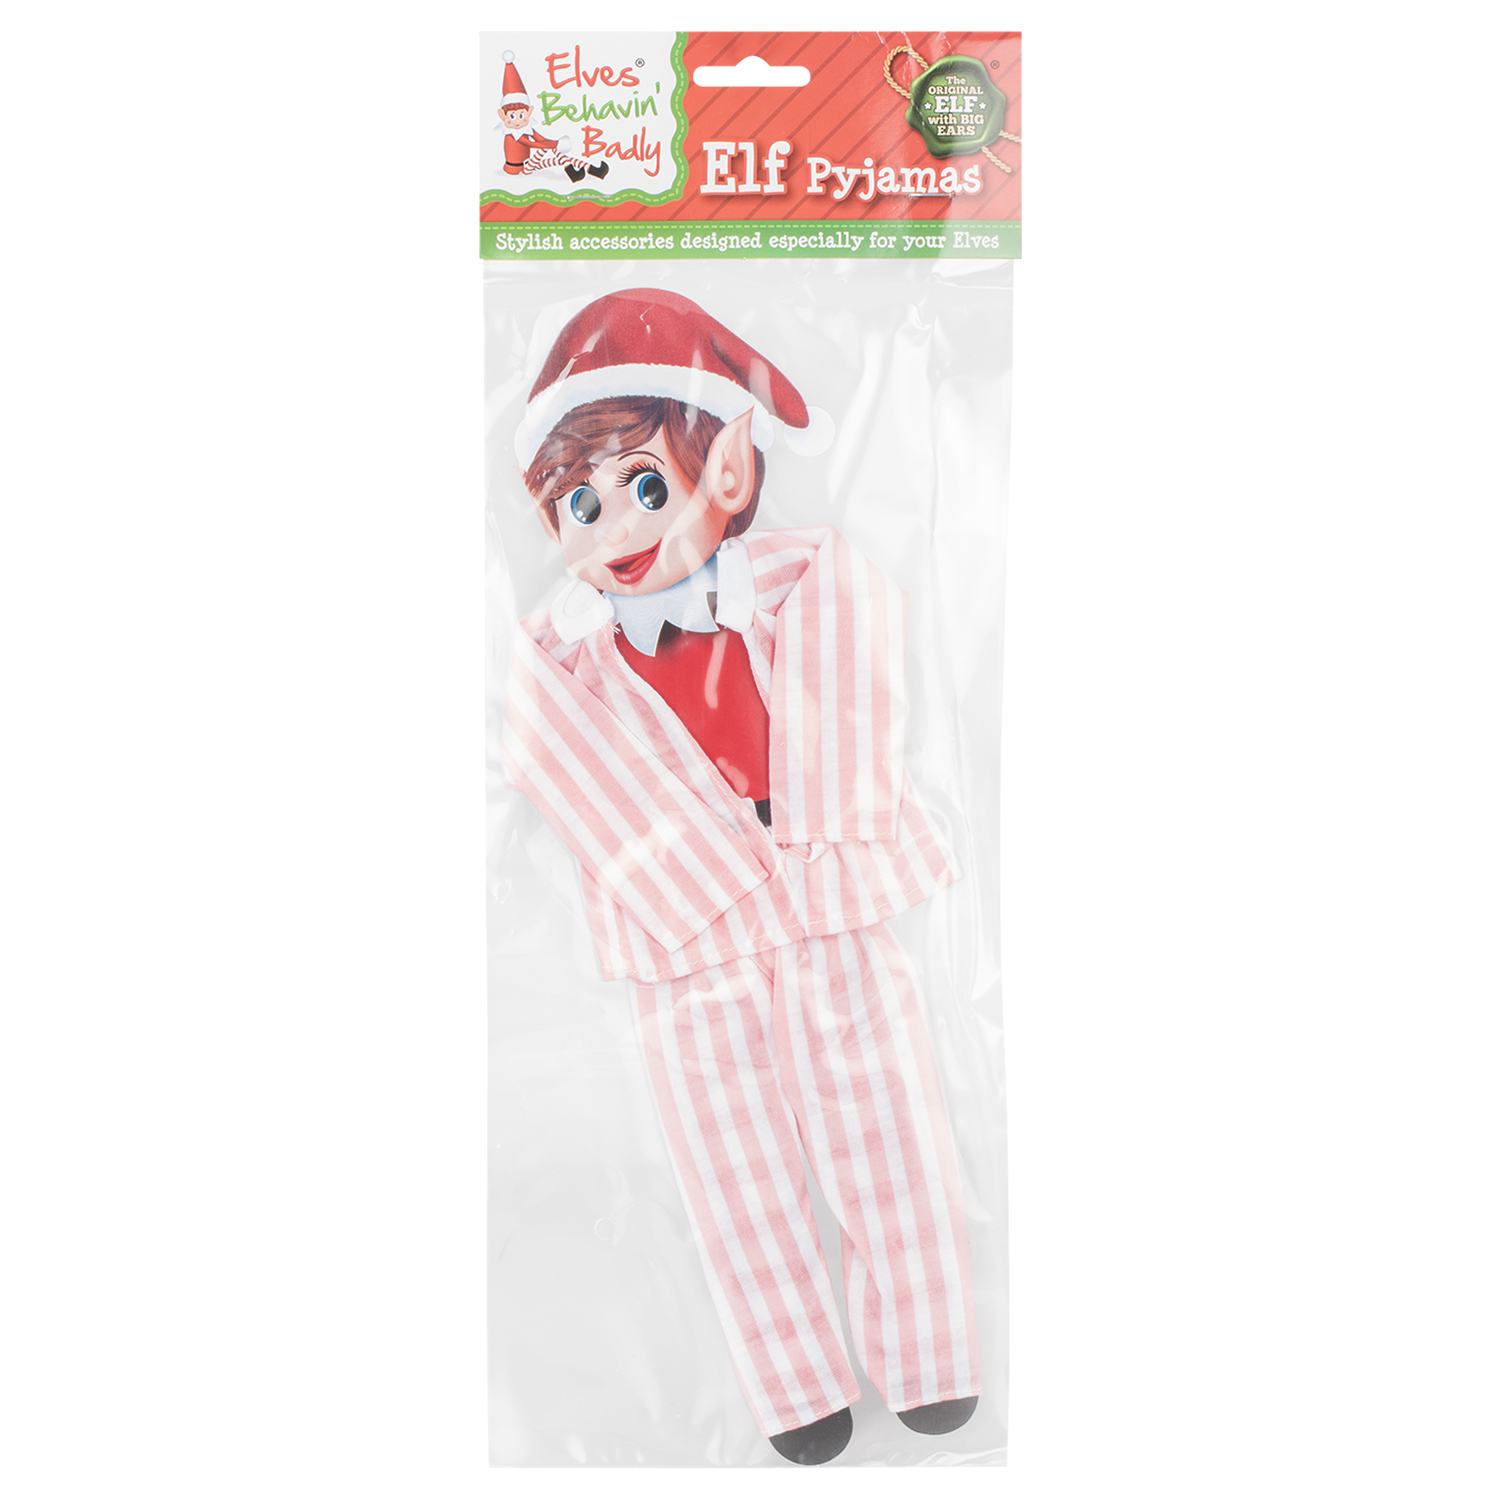 Single Elves Behavin' Badly Striped Elf Pyjamas in Assorted styles Image 2